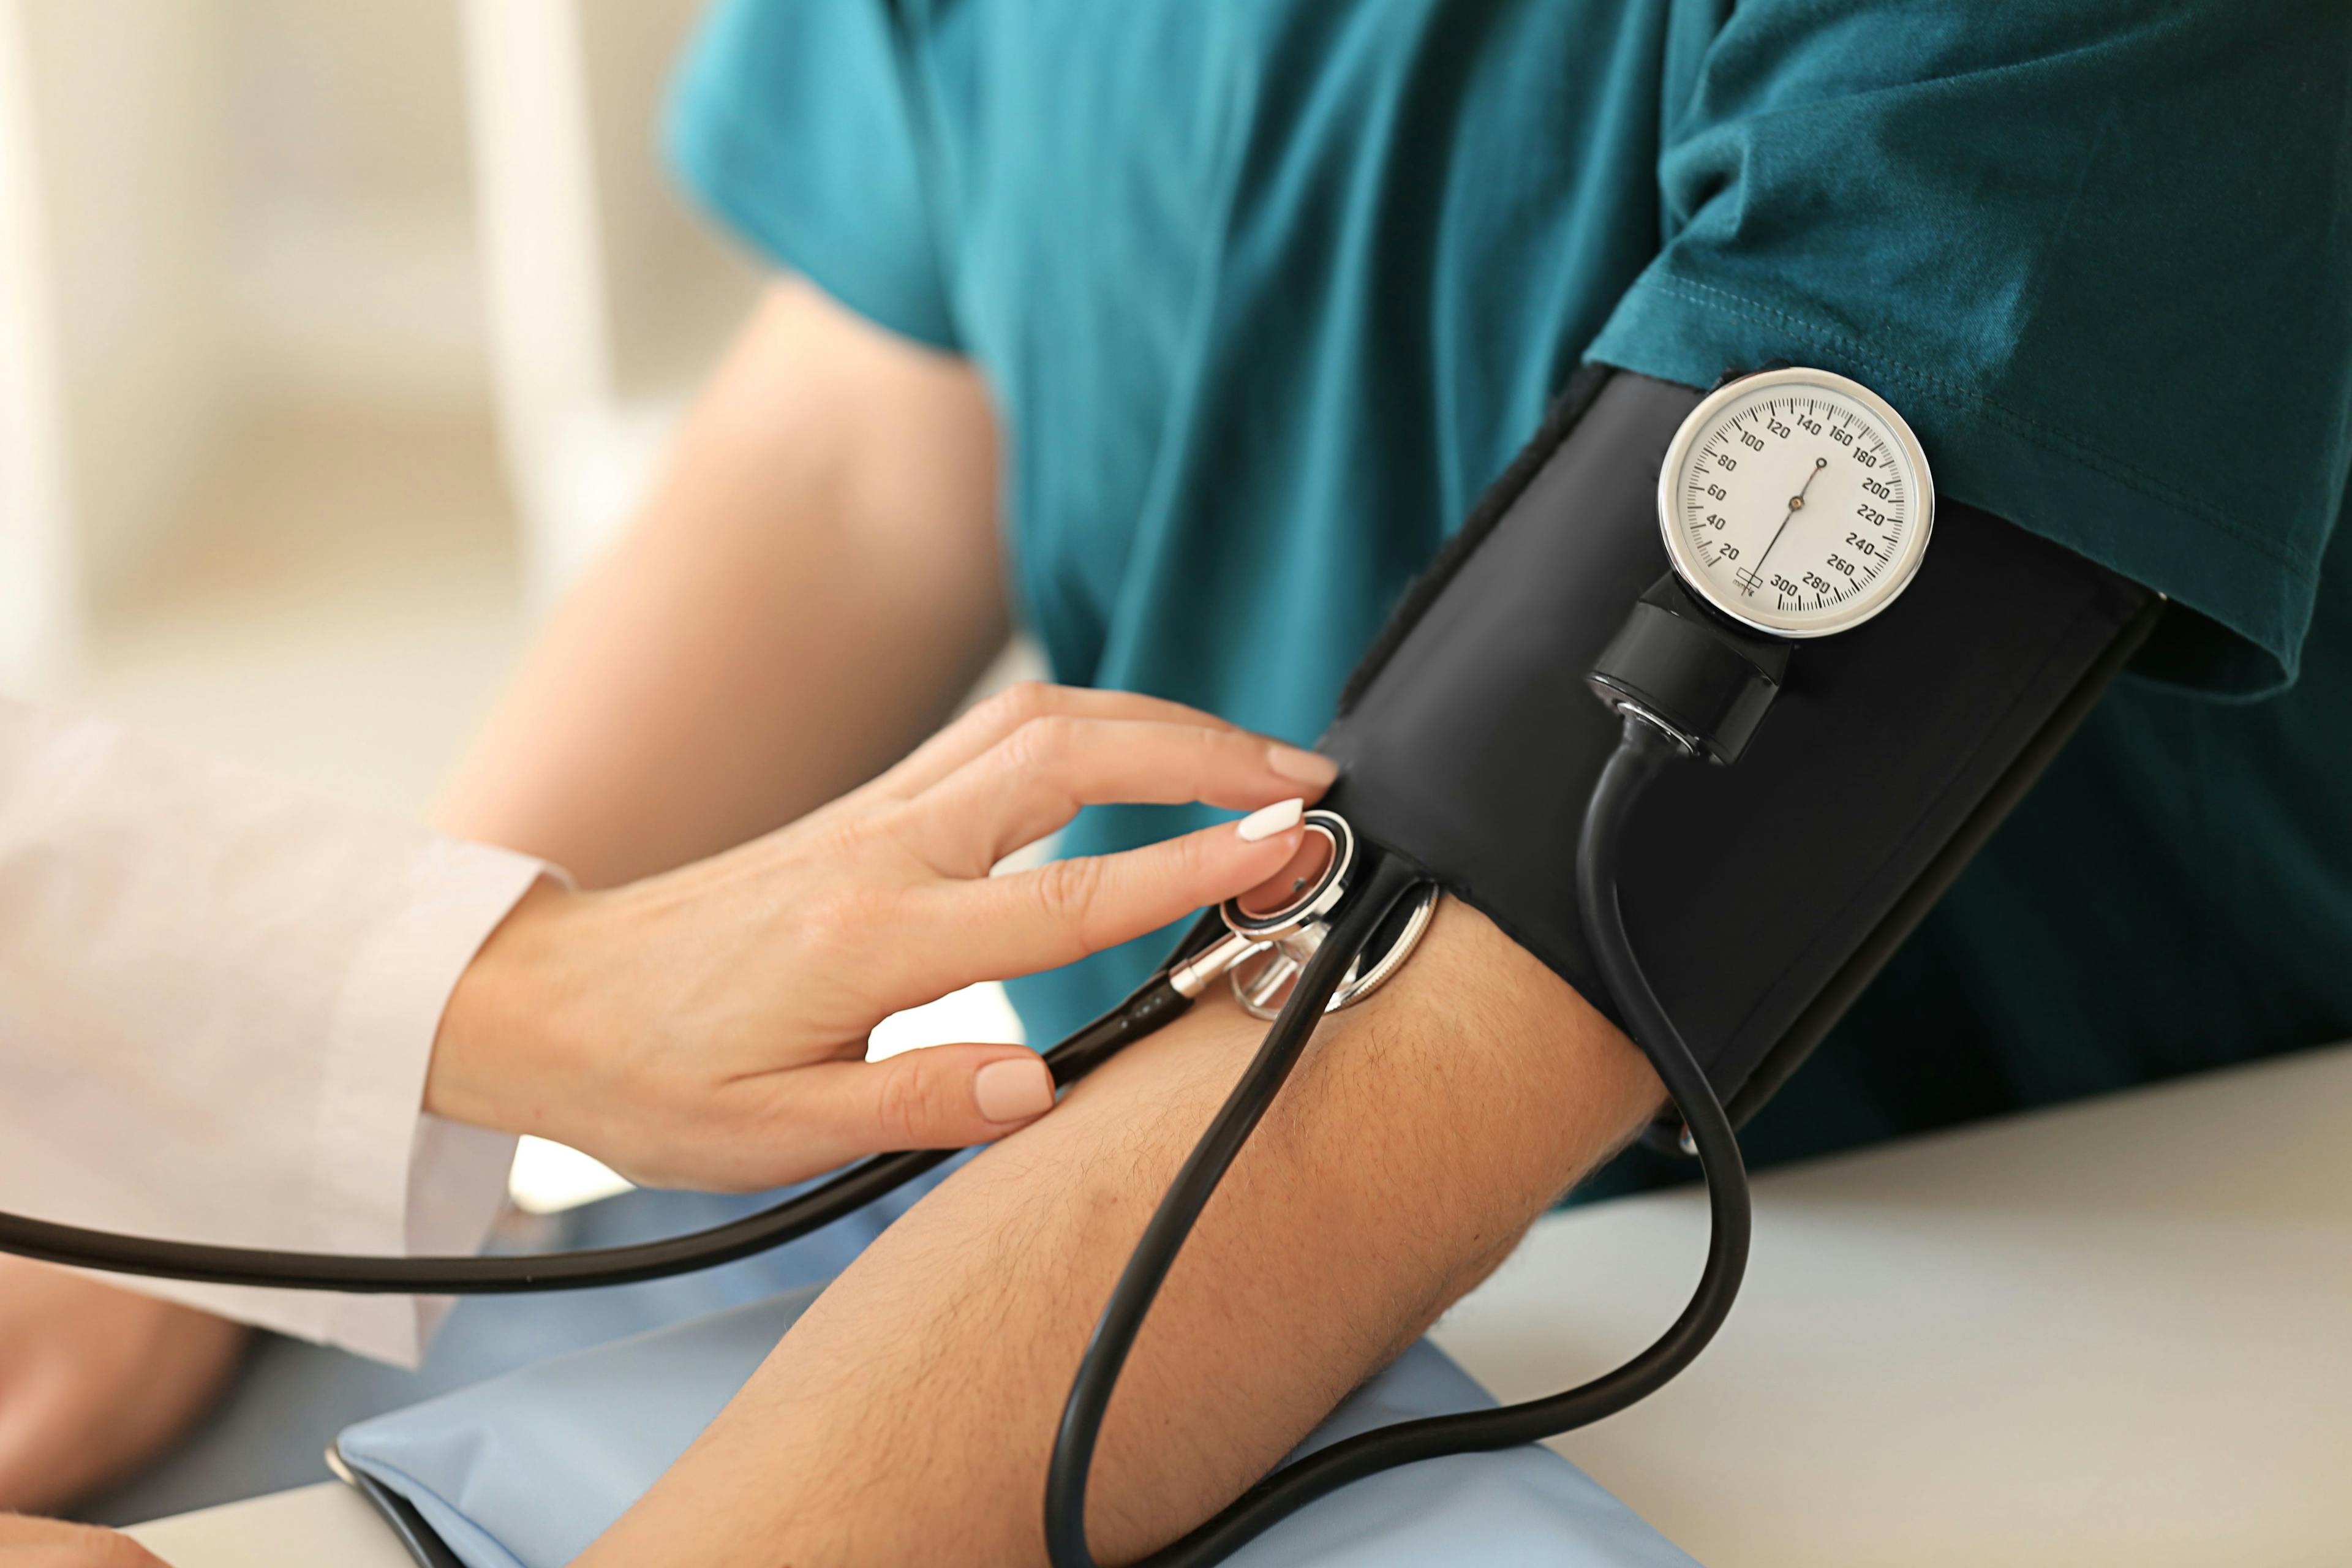 Doctor taking patient's blood pressure | Image credit: Pixel-Shot - stock.adobe.com